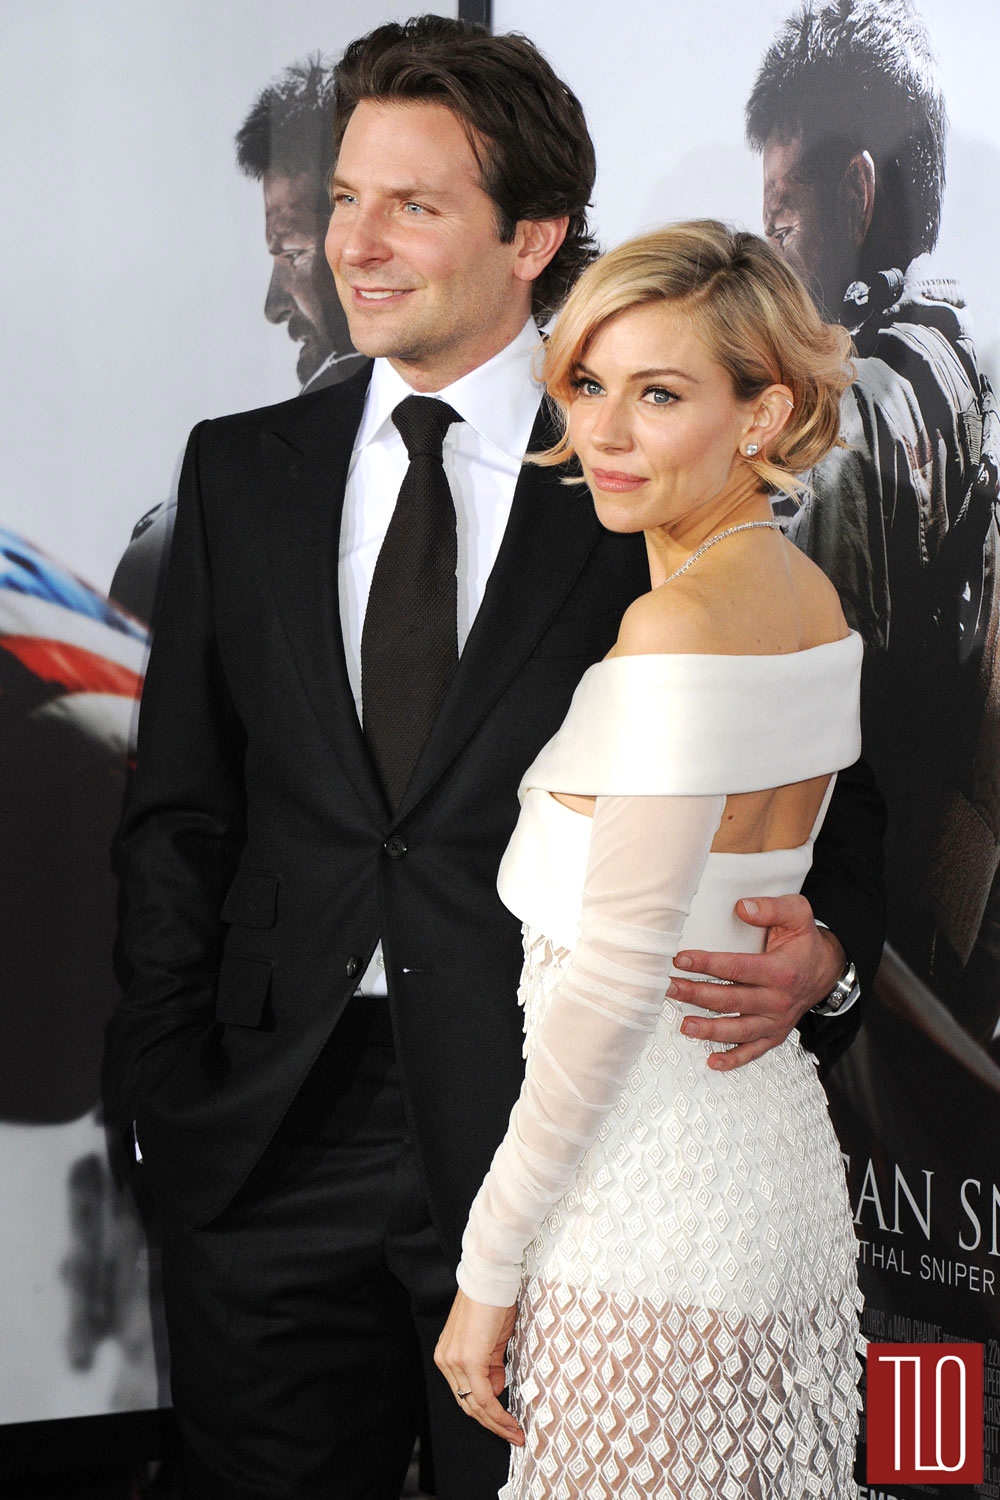 Bradley-Cooper-Sienna-Miller-American-Sniper-New-York-Movie-Premiere-Red-Carpet-Fashion-Tom-Lorenzo-Site-TLO (1)